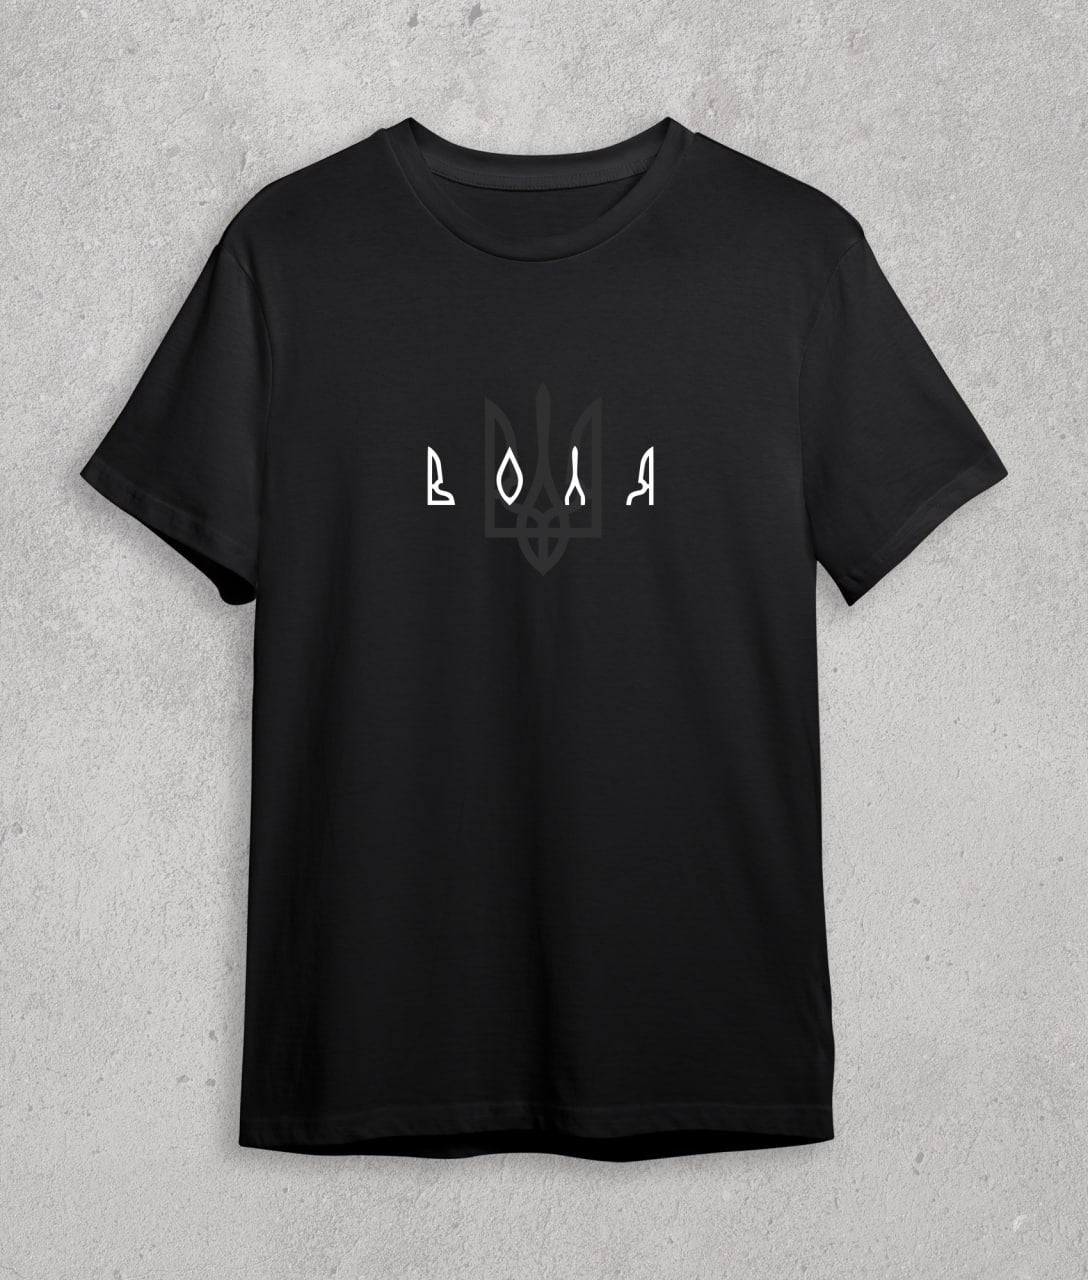 T-shirt ВОЛЯ (Freedom)